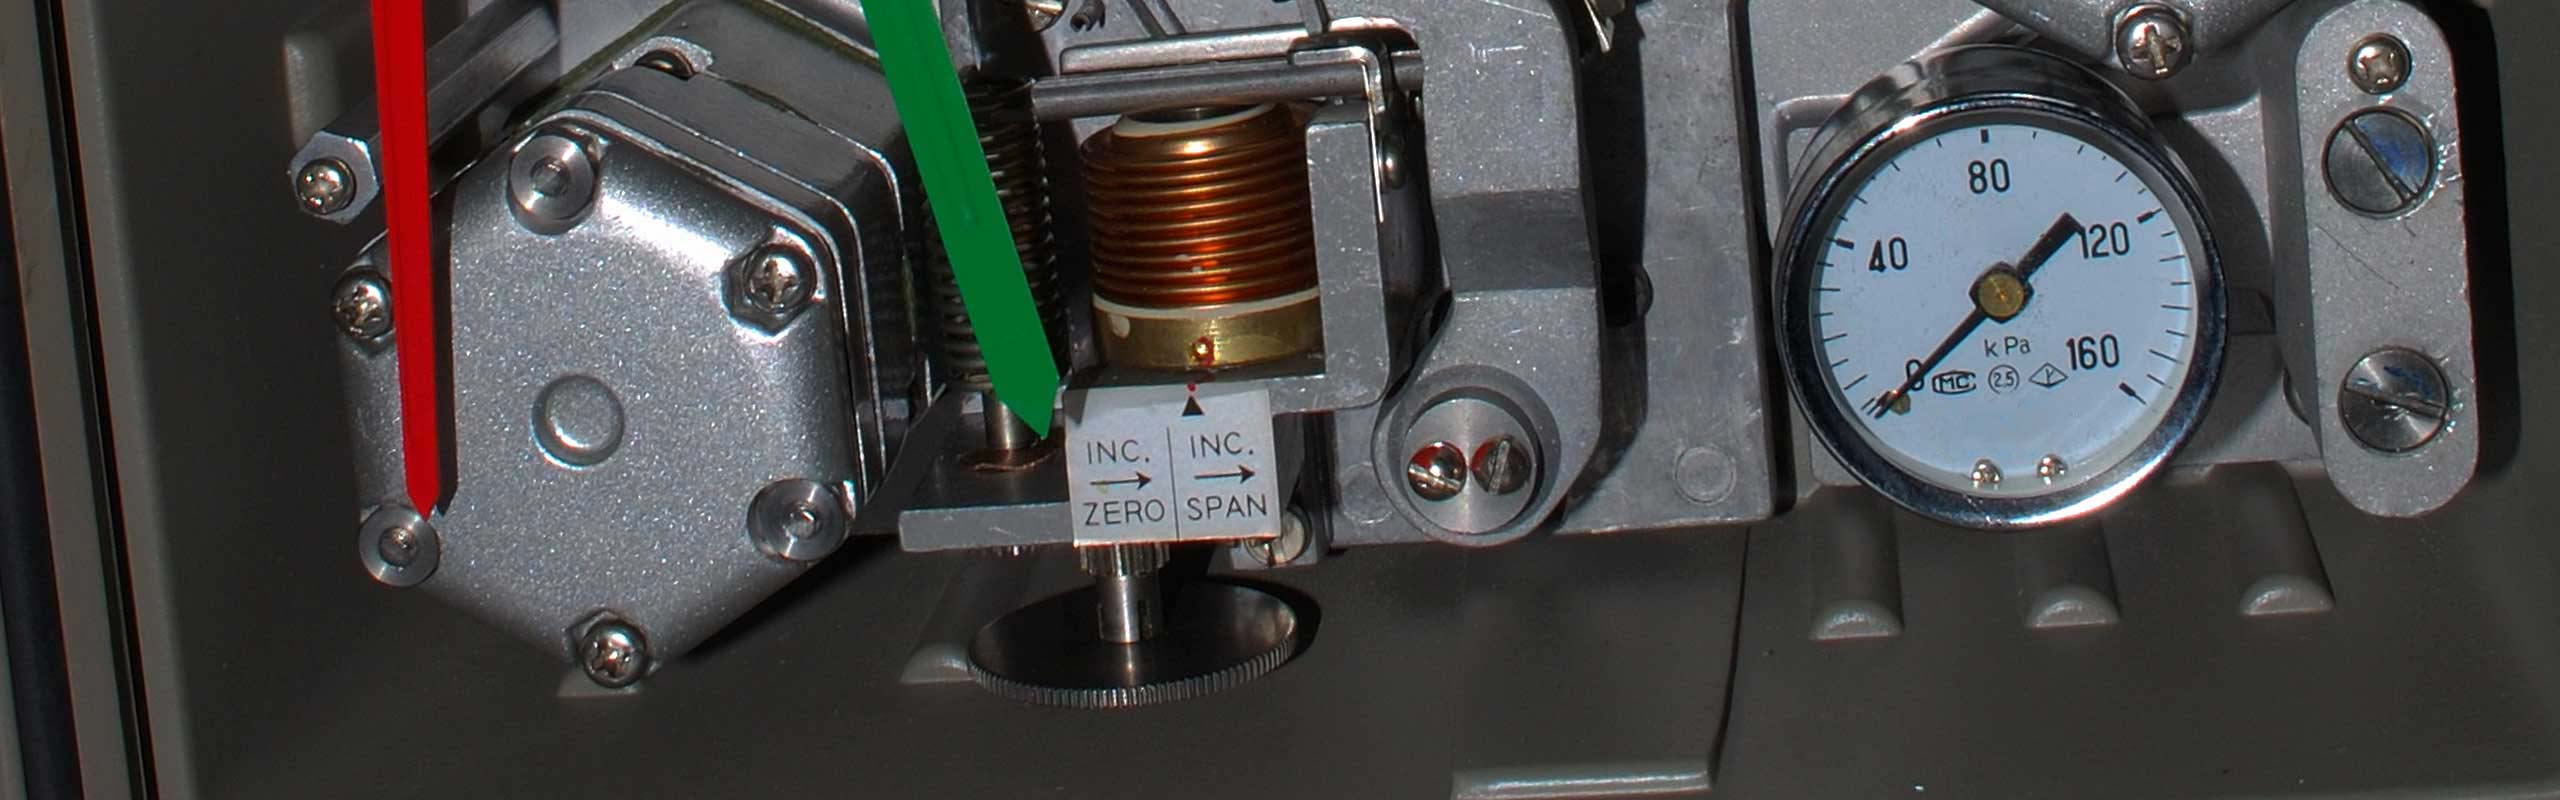 KFL Pneumatic Liquid Level Indicating Controller